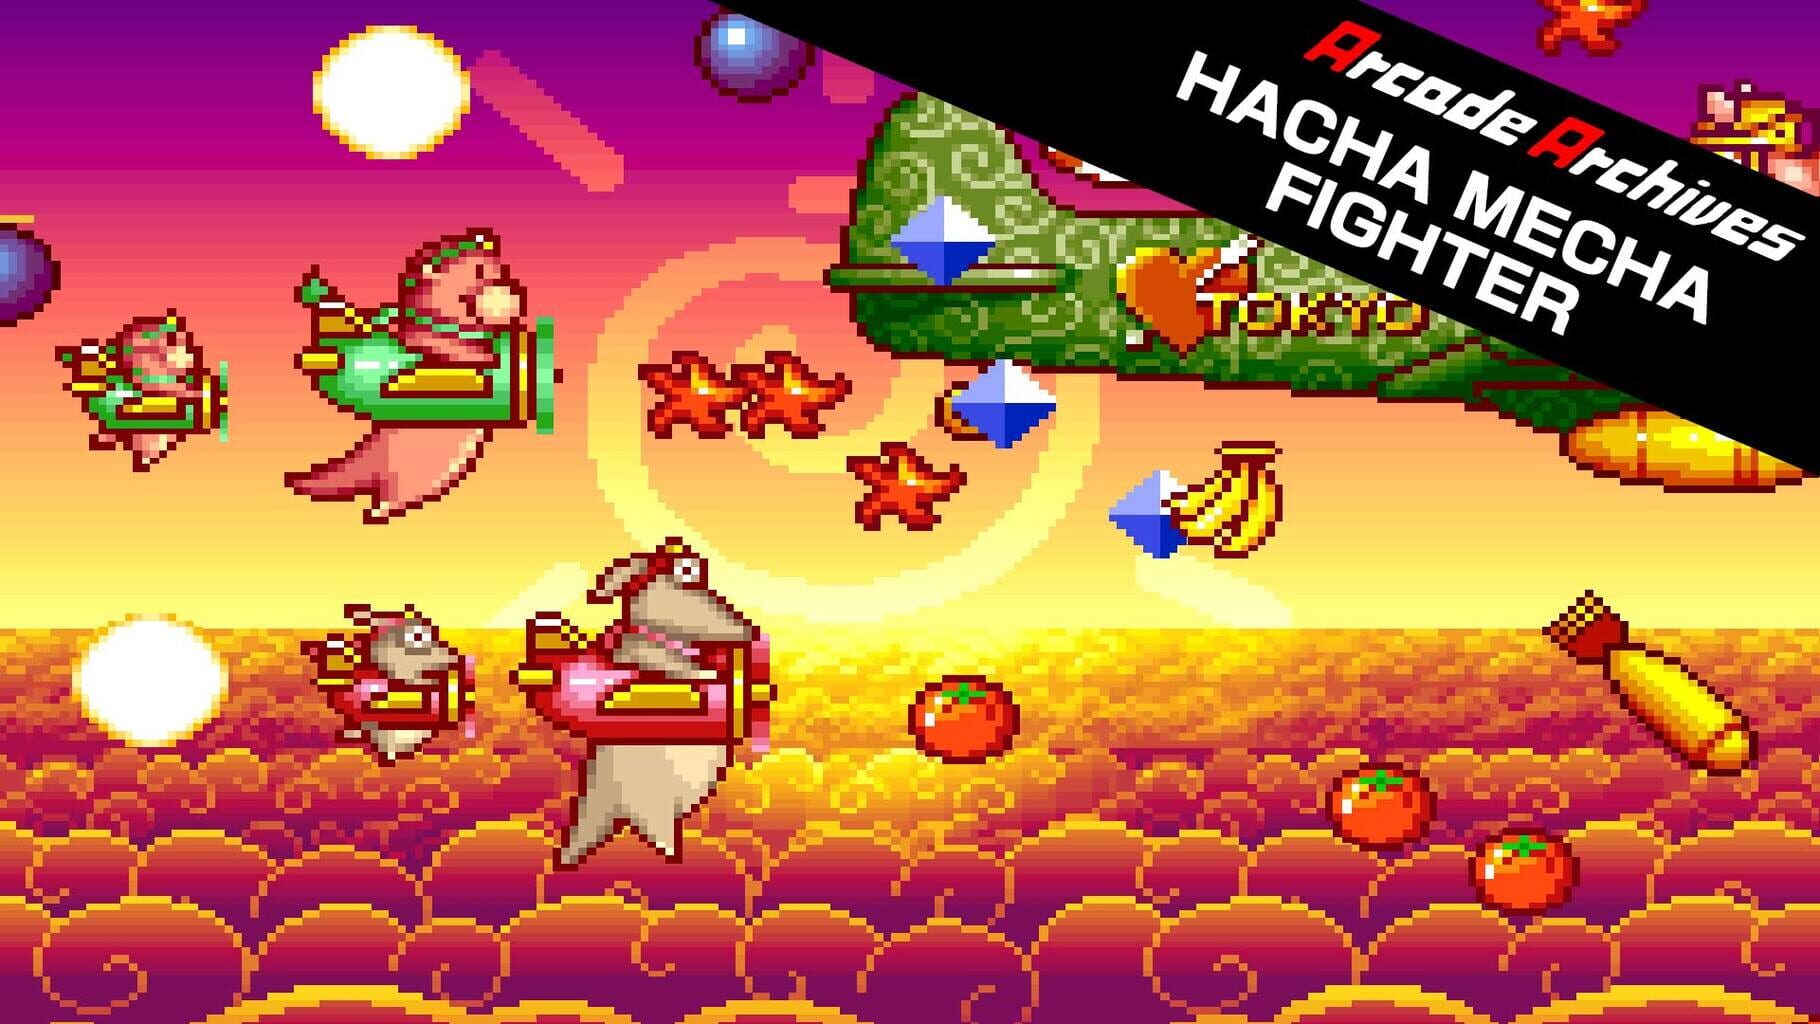 Arcade Archives: Hacha Mecha Fighter artwork